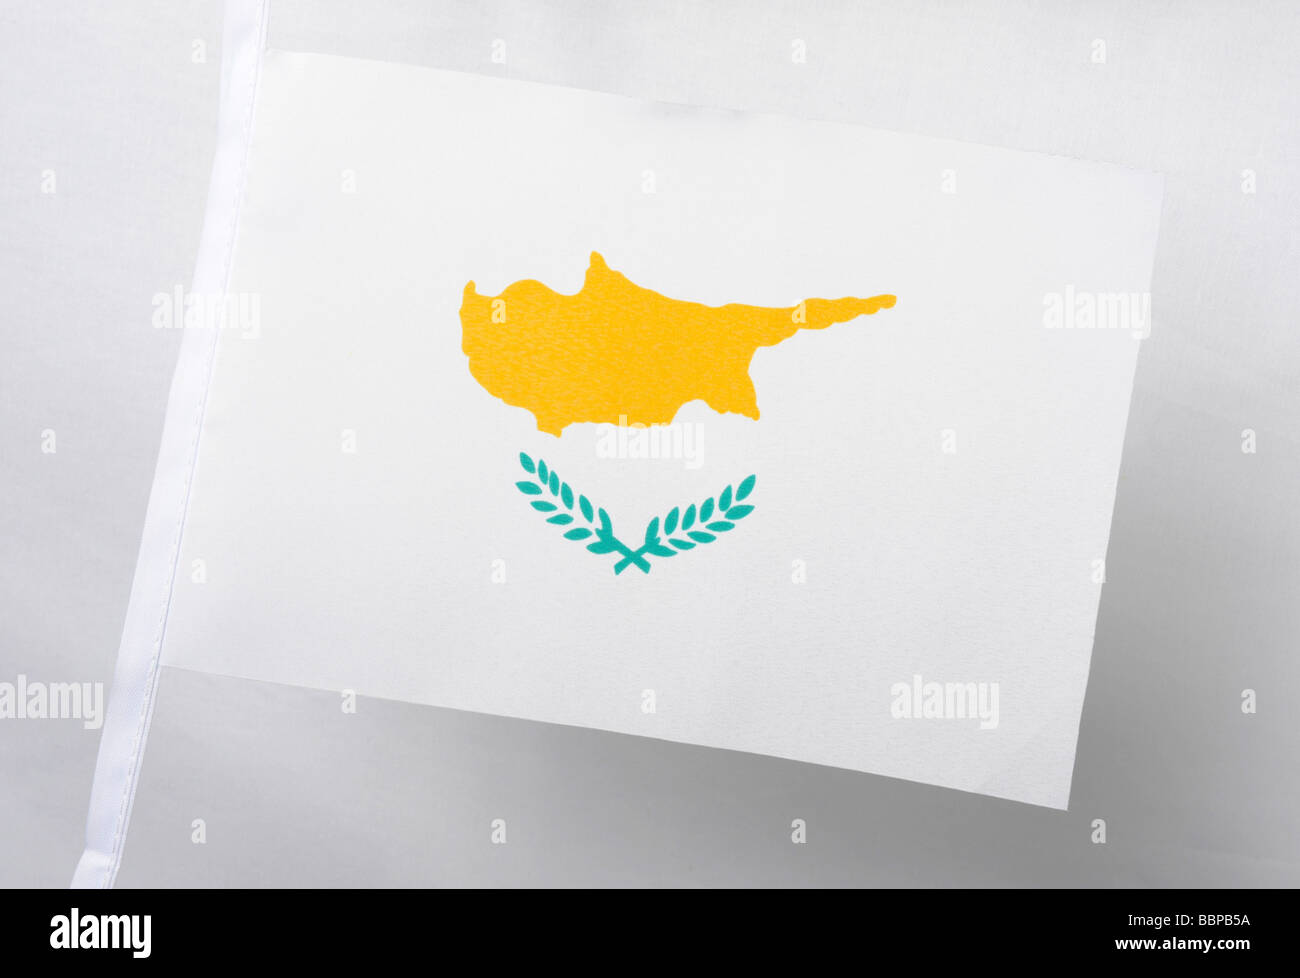 Cyprus national flag Stock Photo